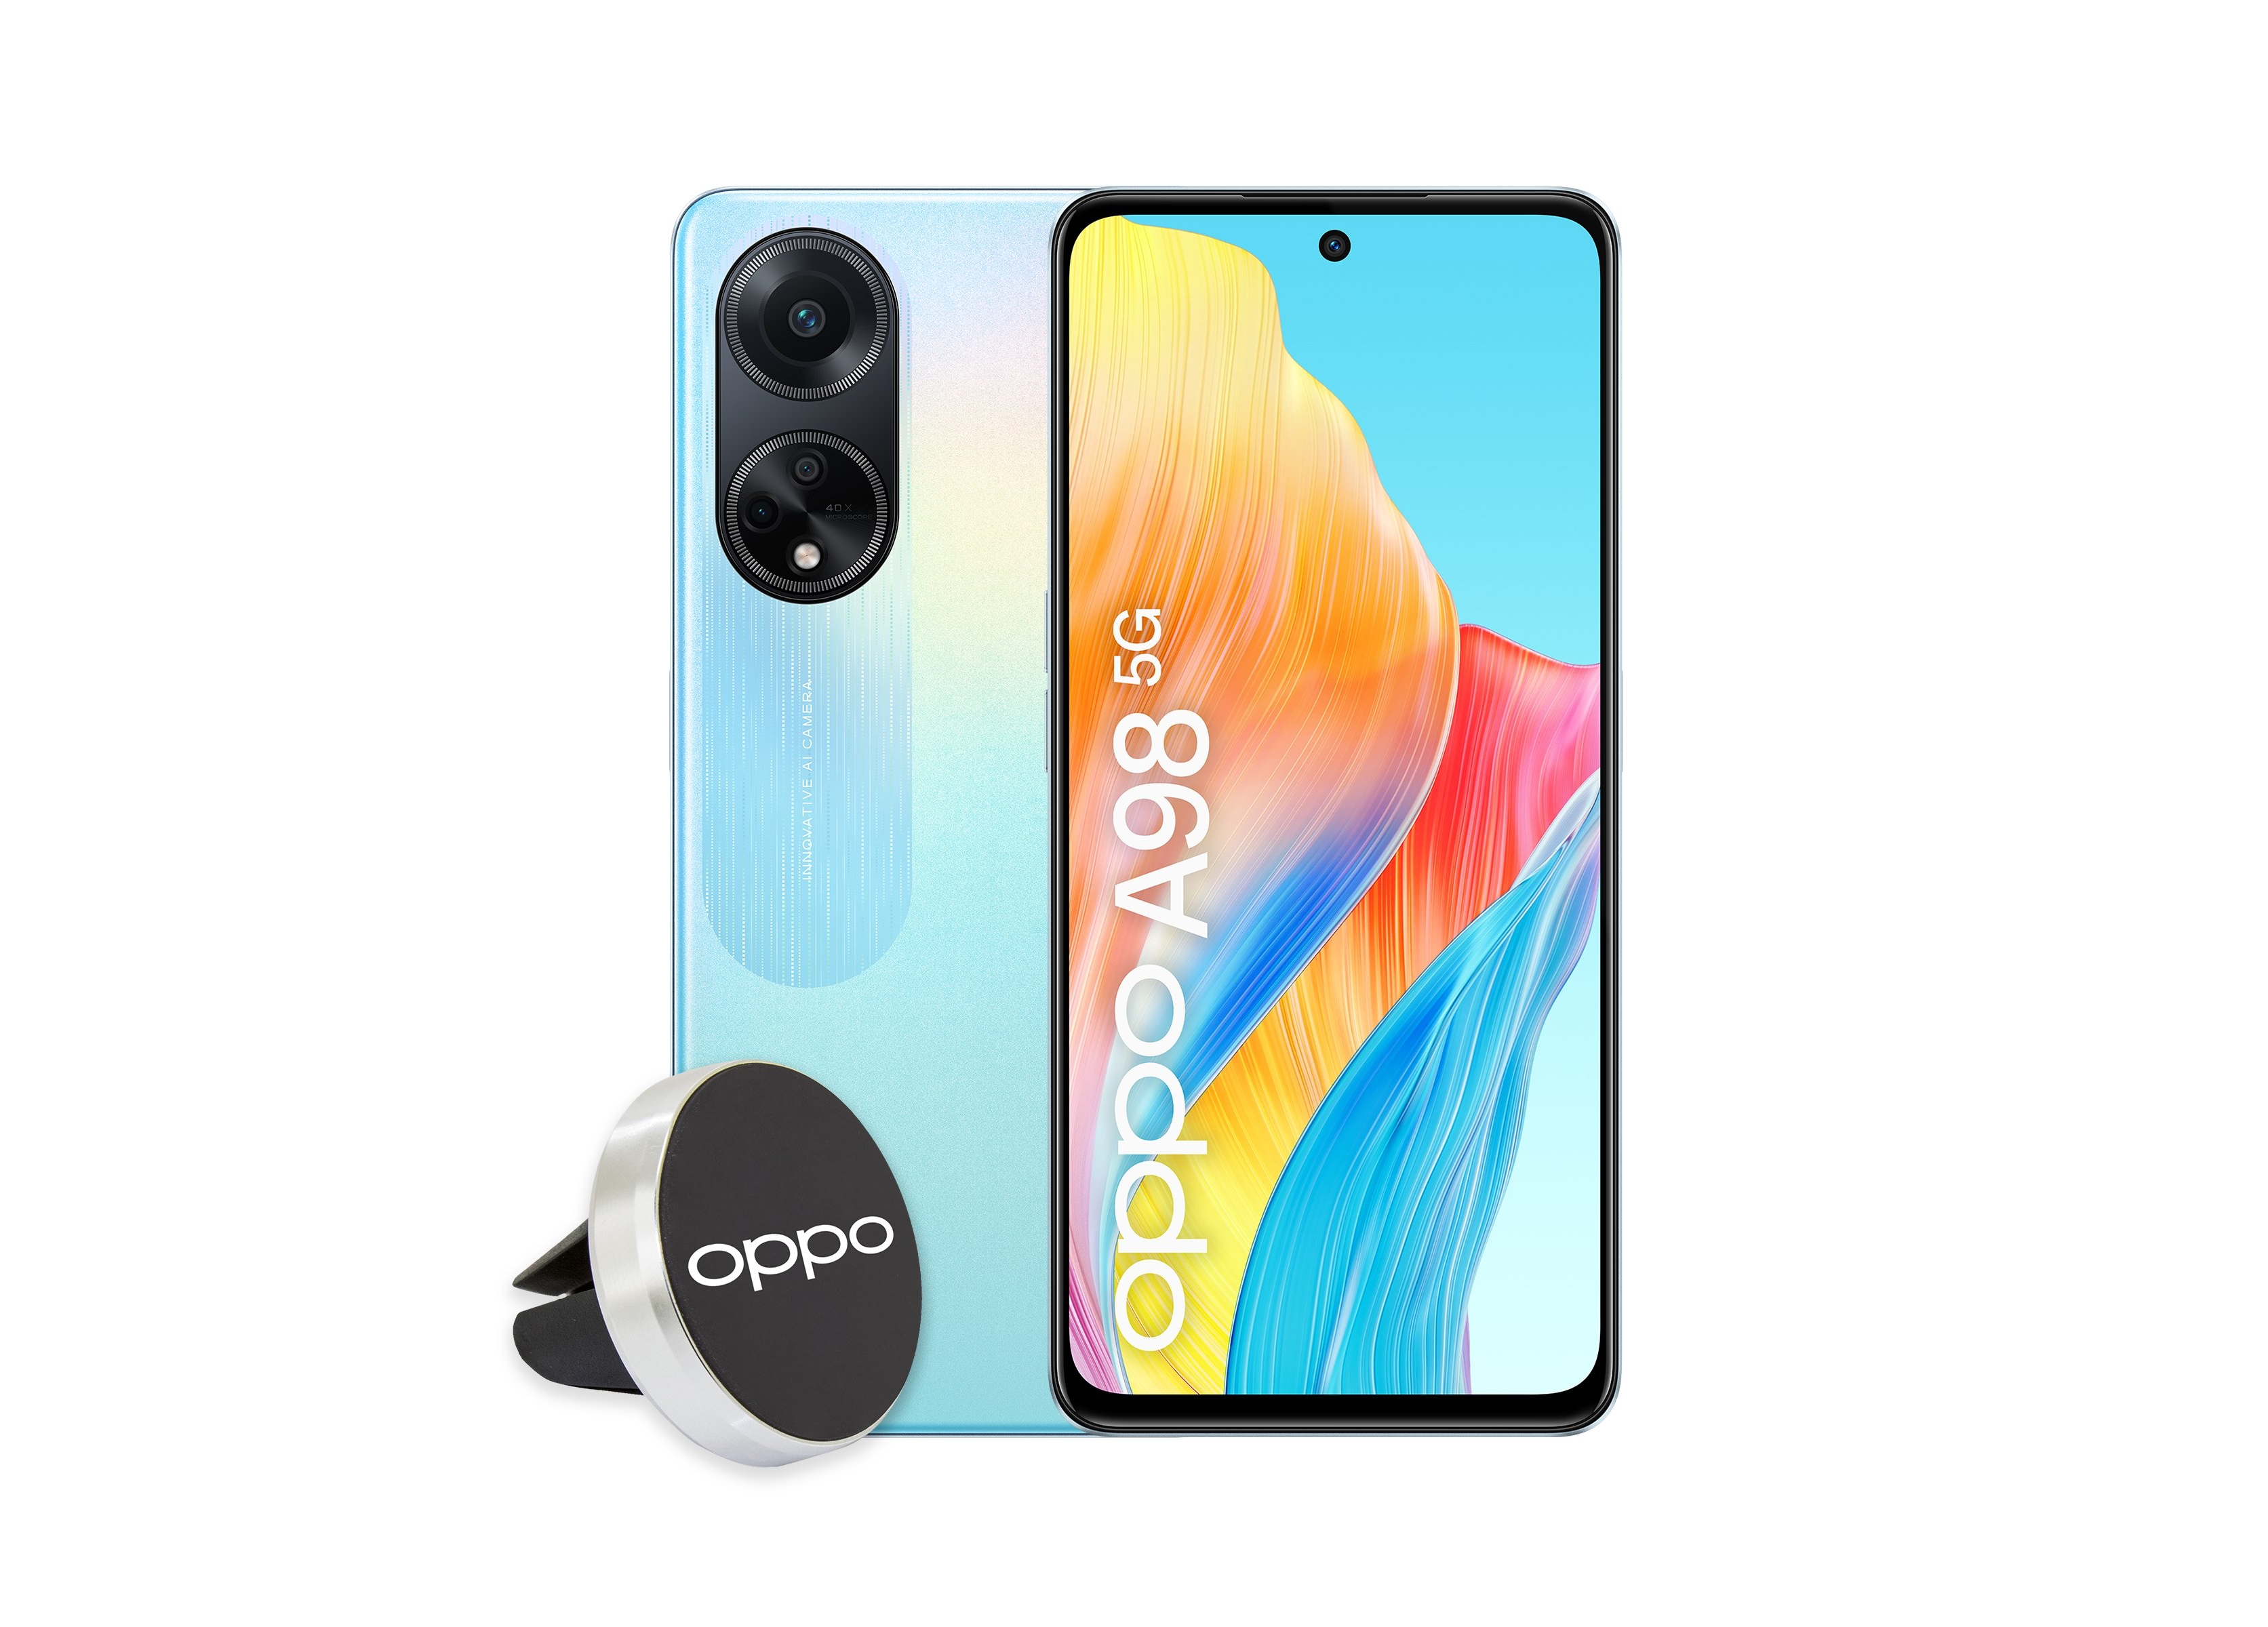 Insider pokazuje rendery OPPO A98 5G: smartfon z ekranem 120Hz i układem Snapdragon 695